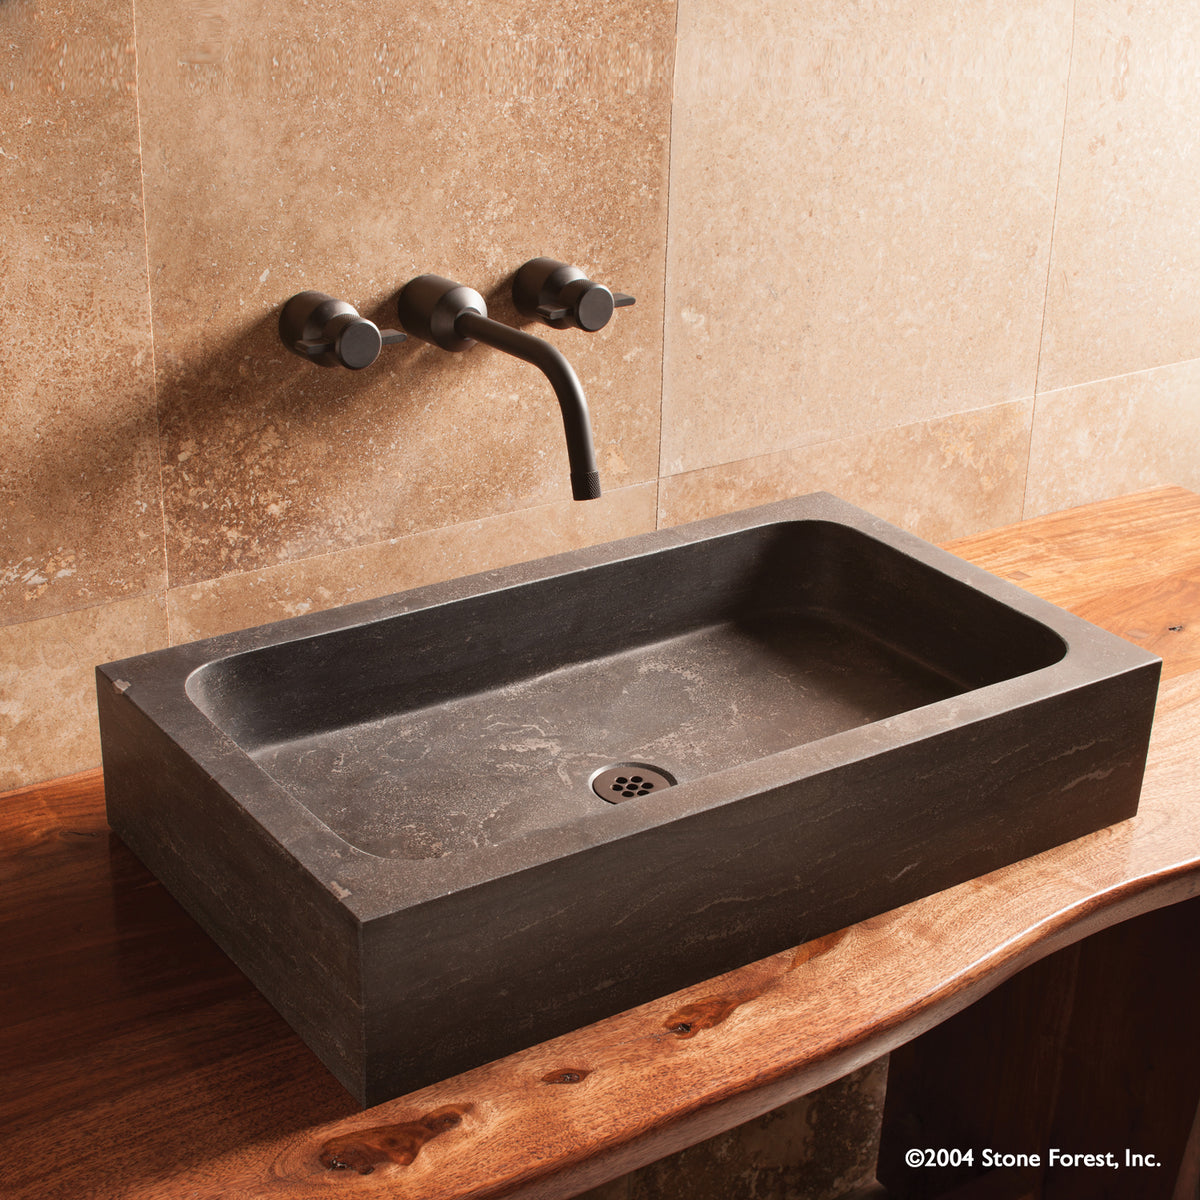 Milano Vessel bath sink in antique gray limestone image 2 of 3